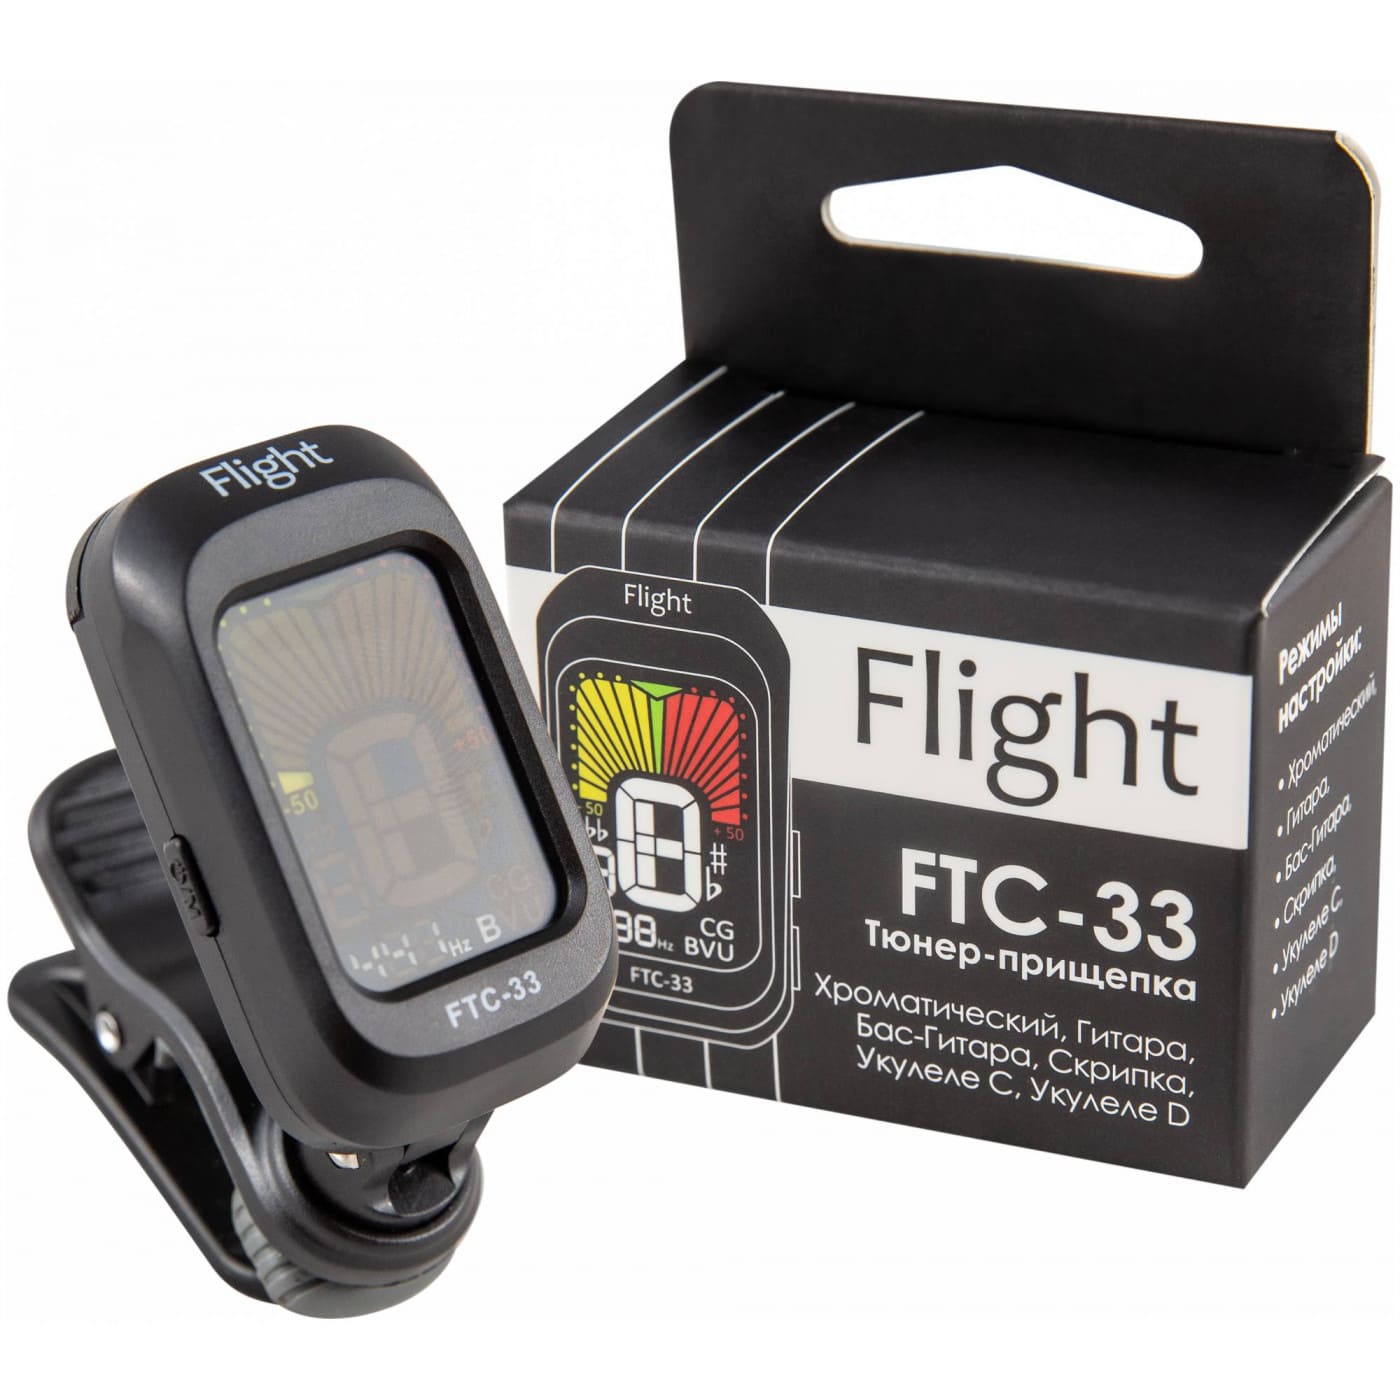 FLIGHT FTC-33 - Хроматический тюнер-прищепка